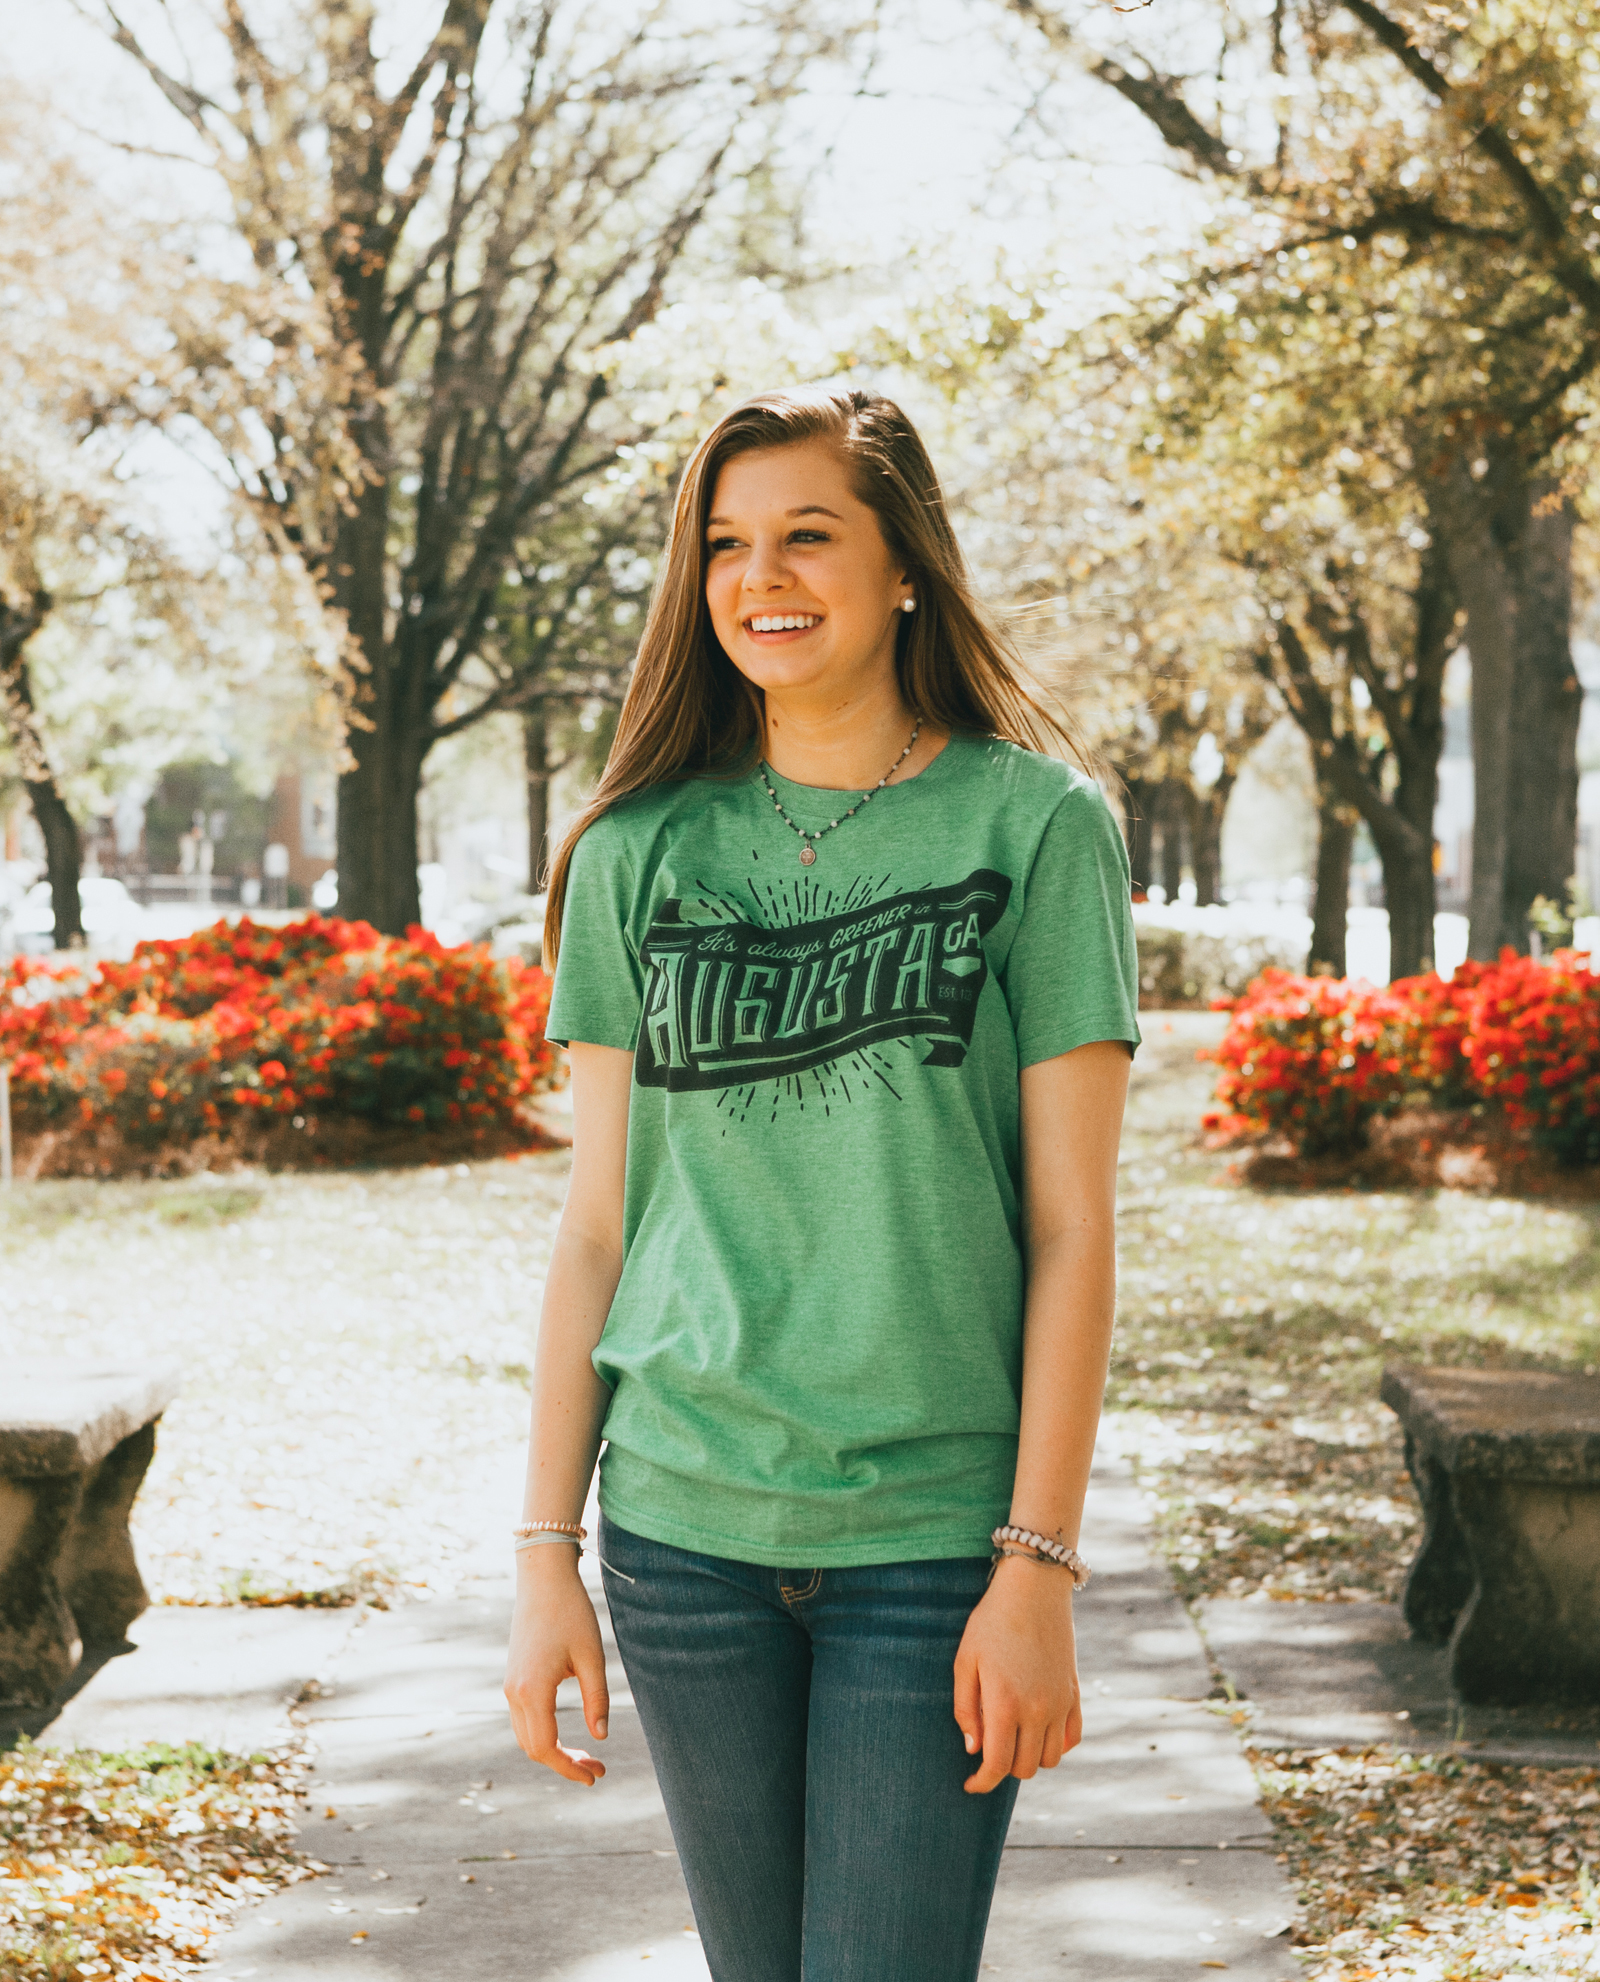 Girl wearing green Always Greener shirt on sidewalk in front of flowers